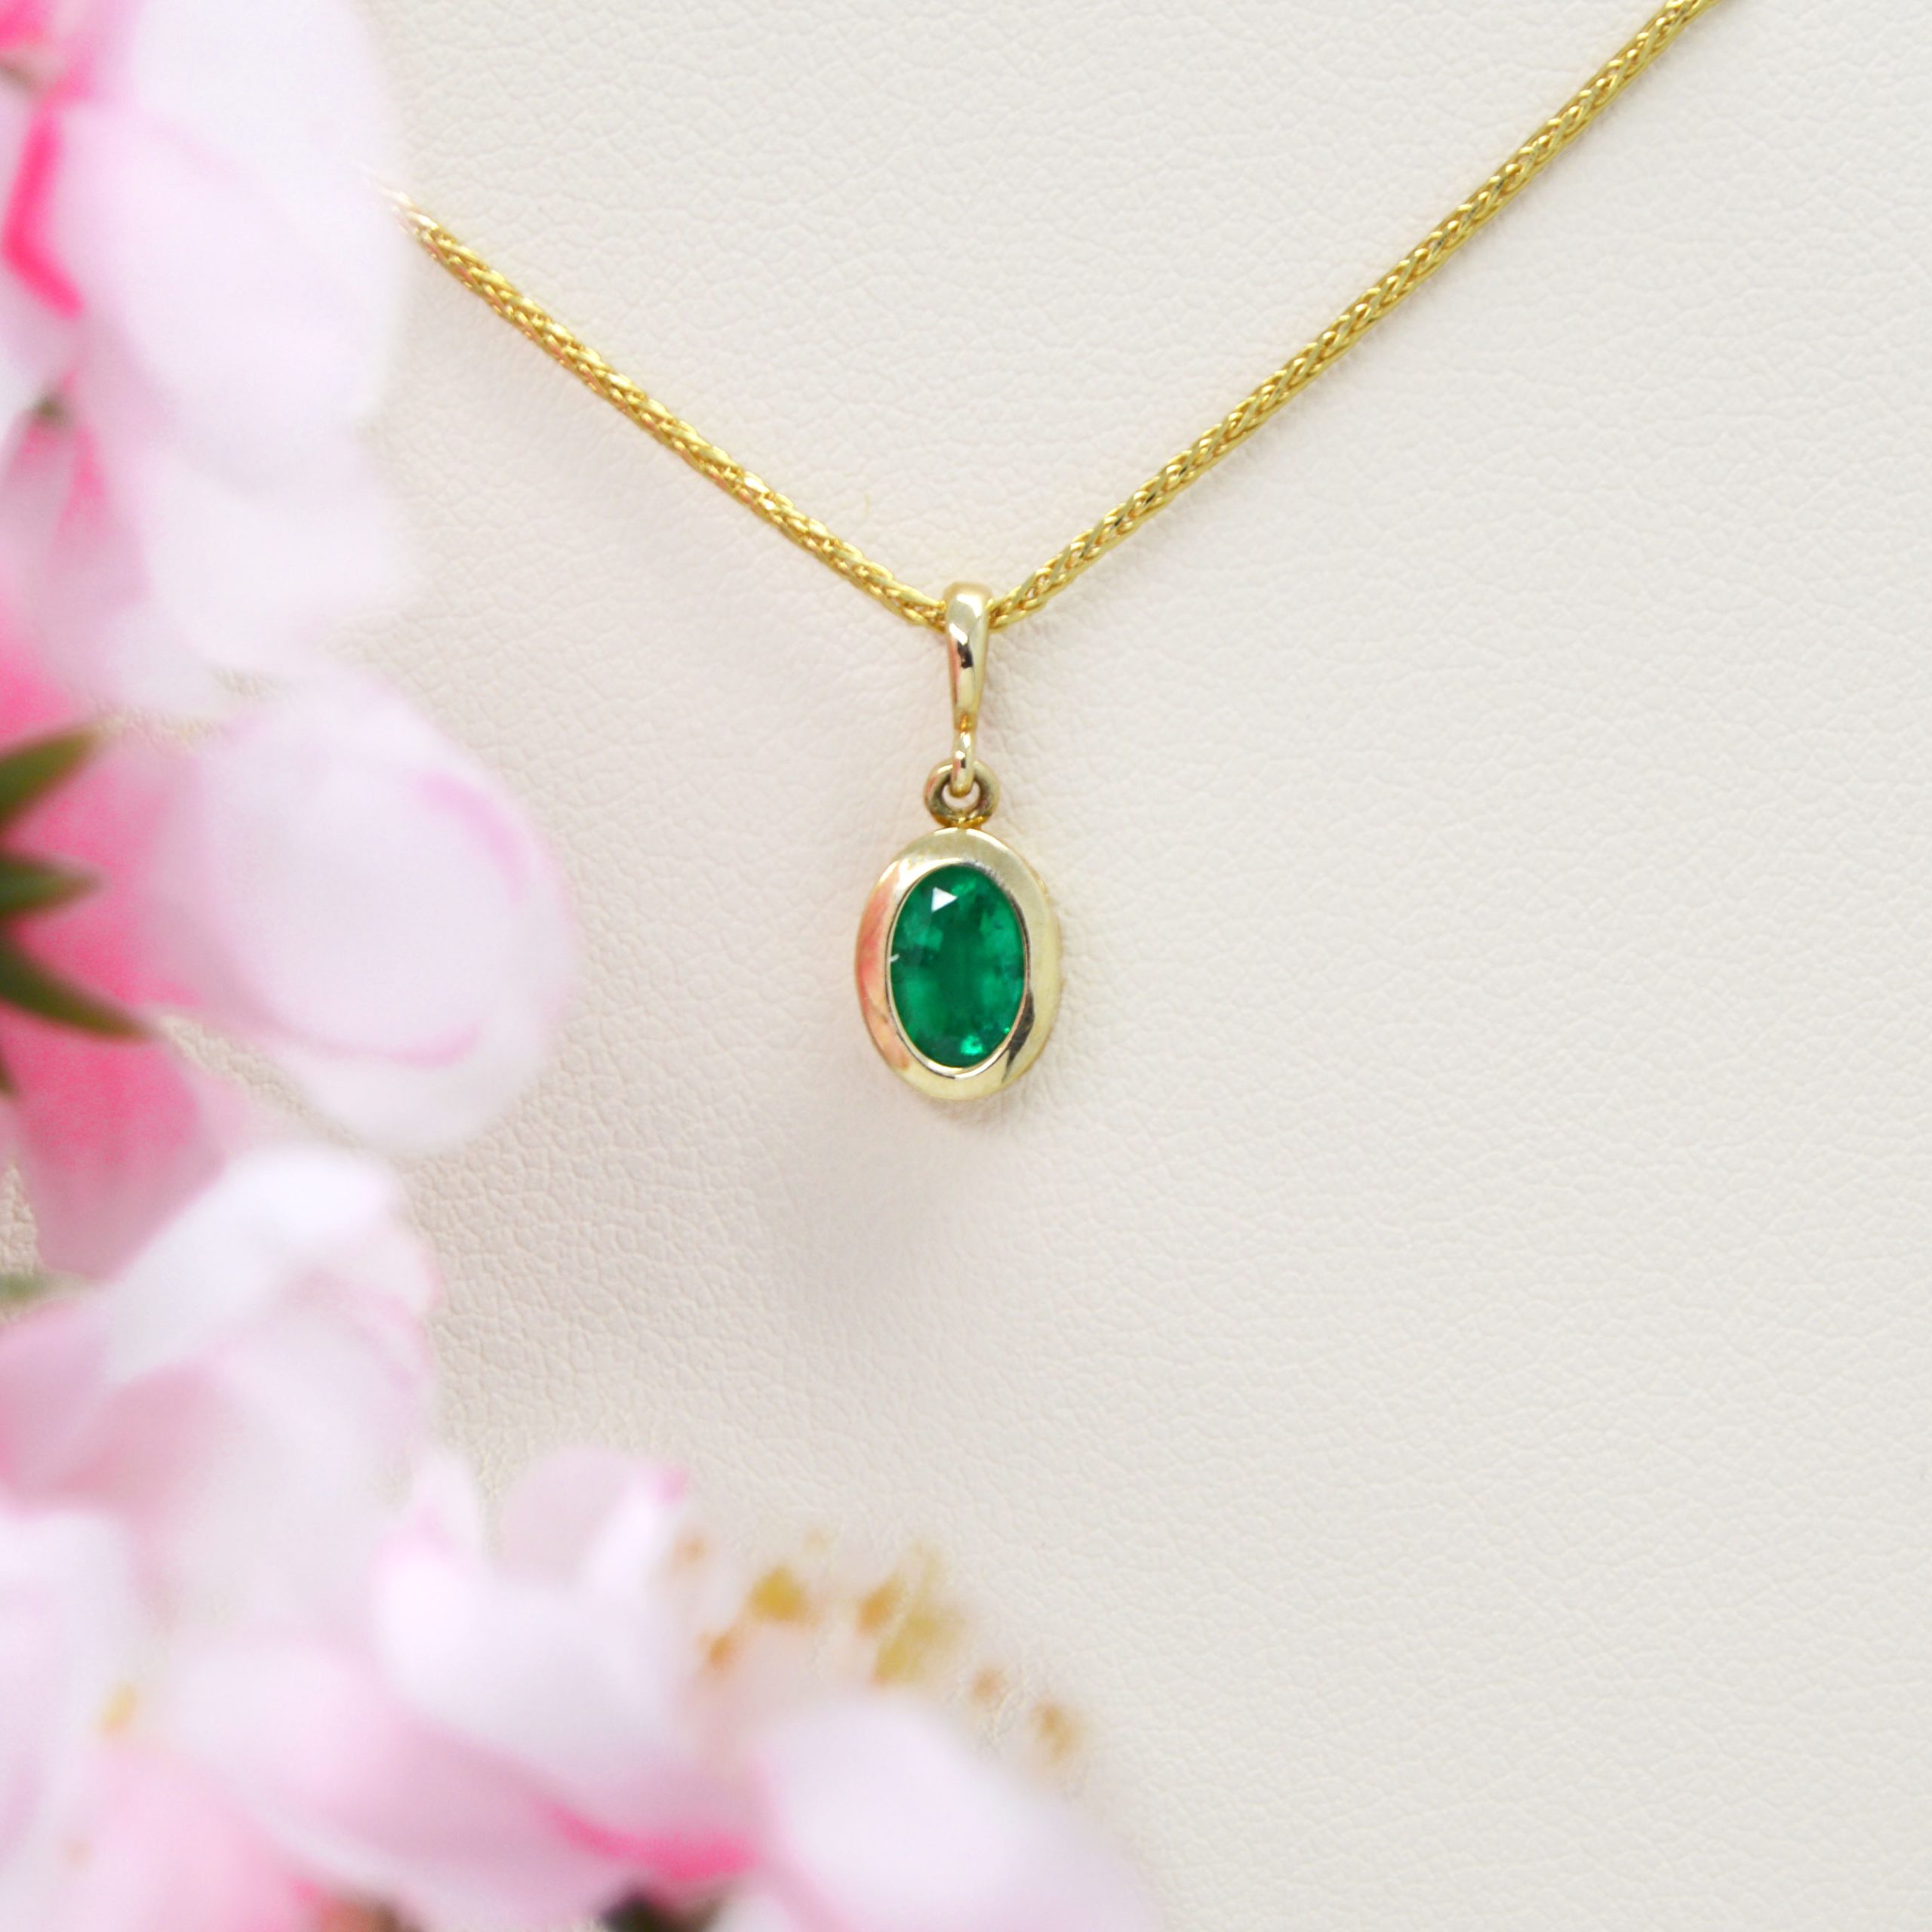 Oval Emerald pendant bezel-set in 14KT yellow gold